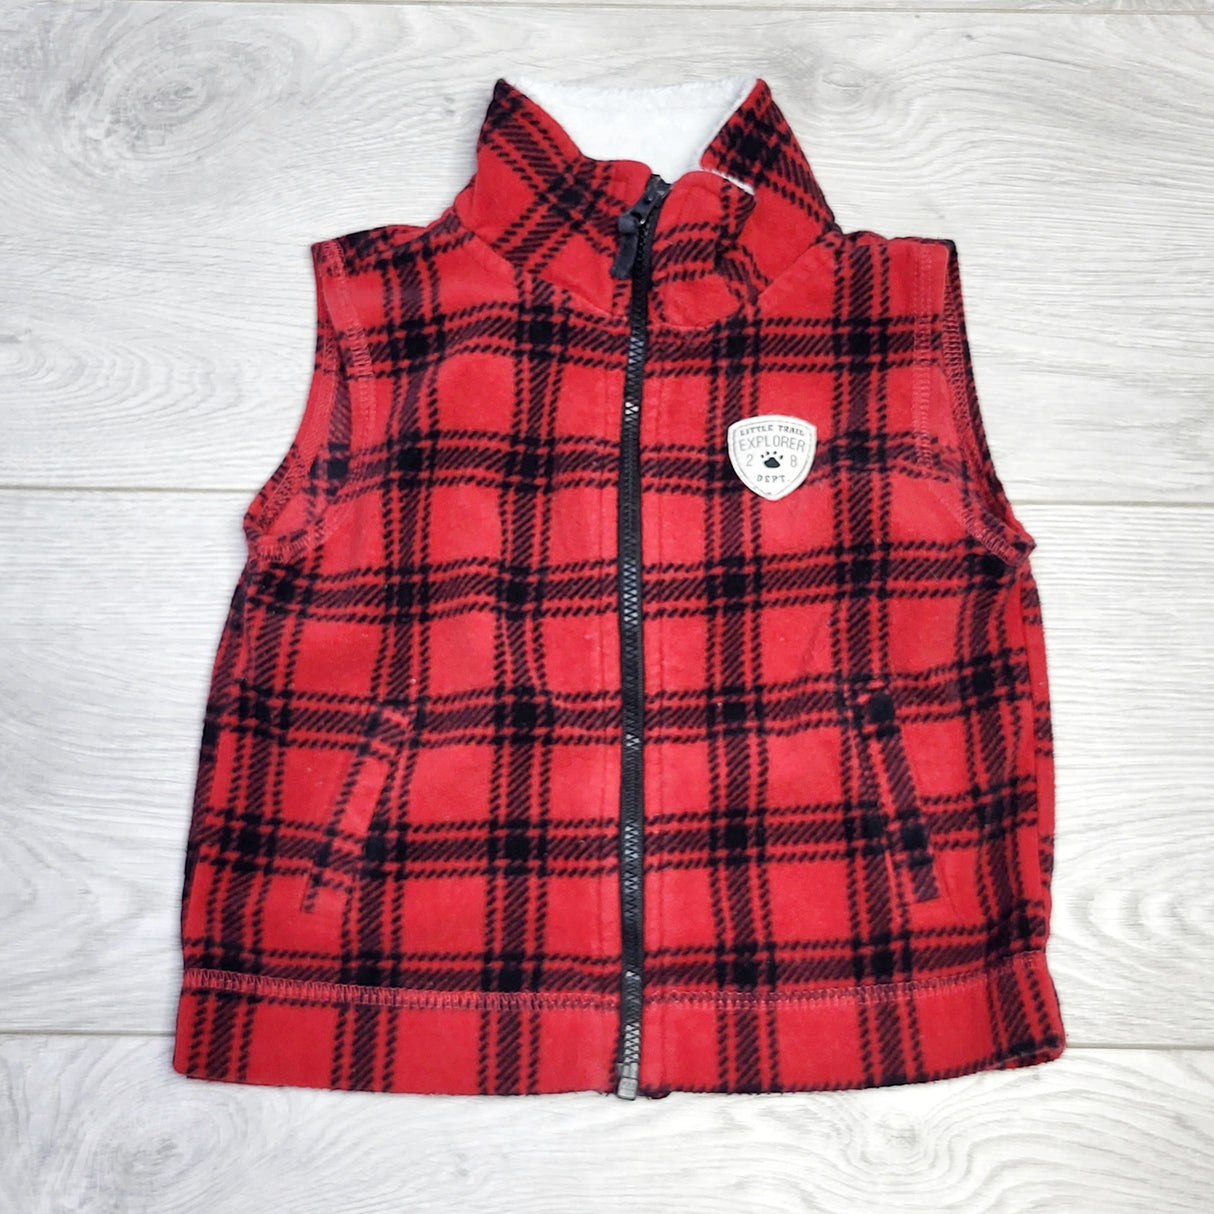 RZA2 - Carters red plaid fleece vest. Size 18 months